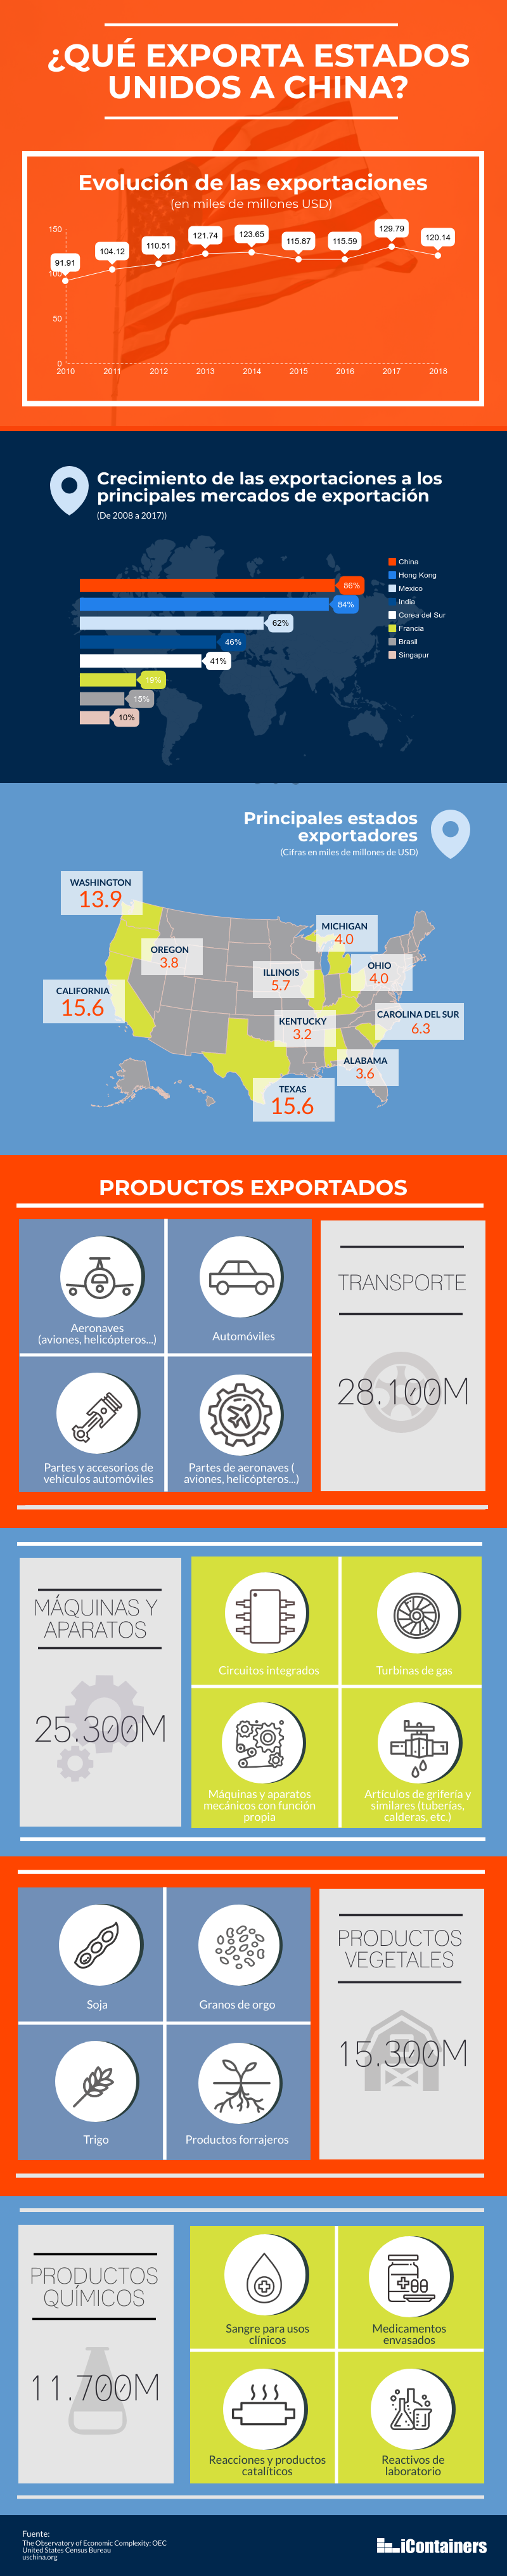 que-exporta-estados-unidos-a-china-infografia.png